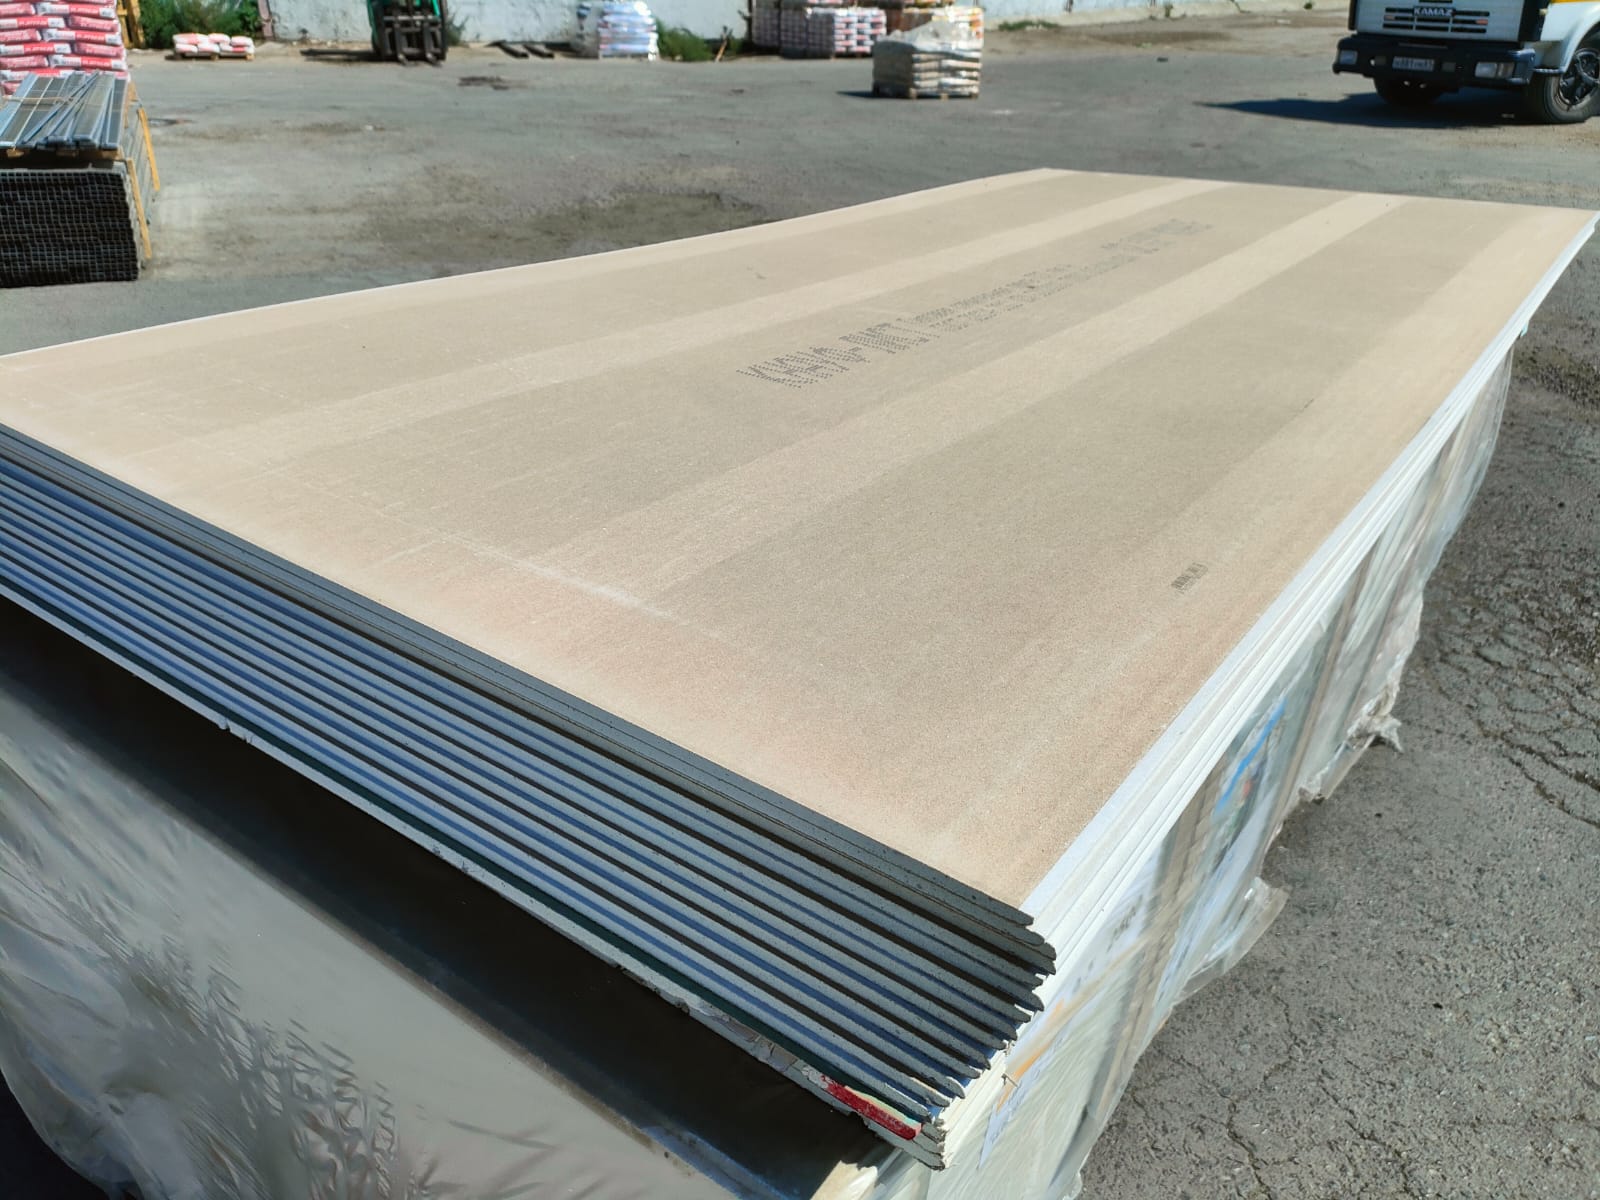 Гипсокартон (ГКЛ) КНАУФ лист стандартный 2500 x 1200 x 9,5 мм